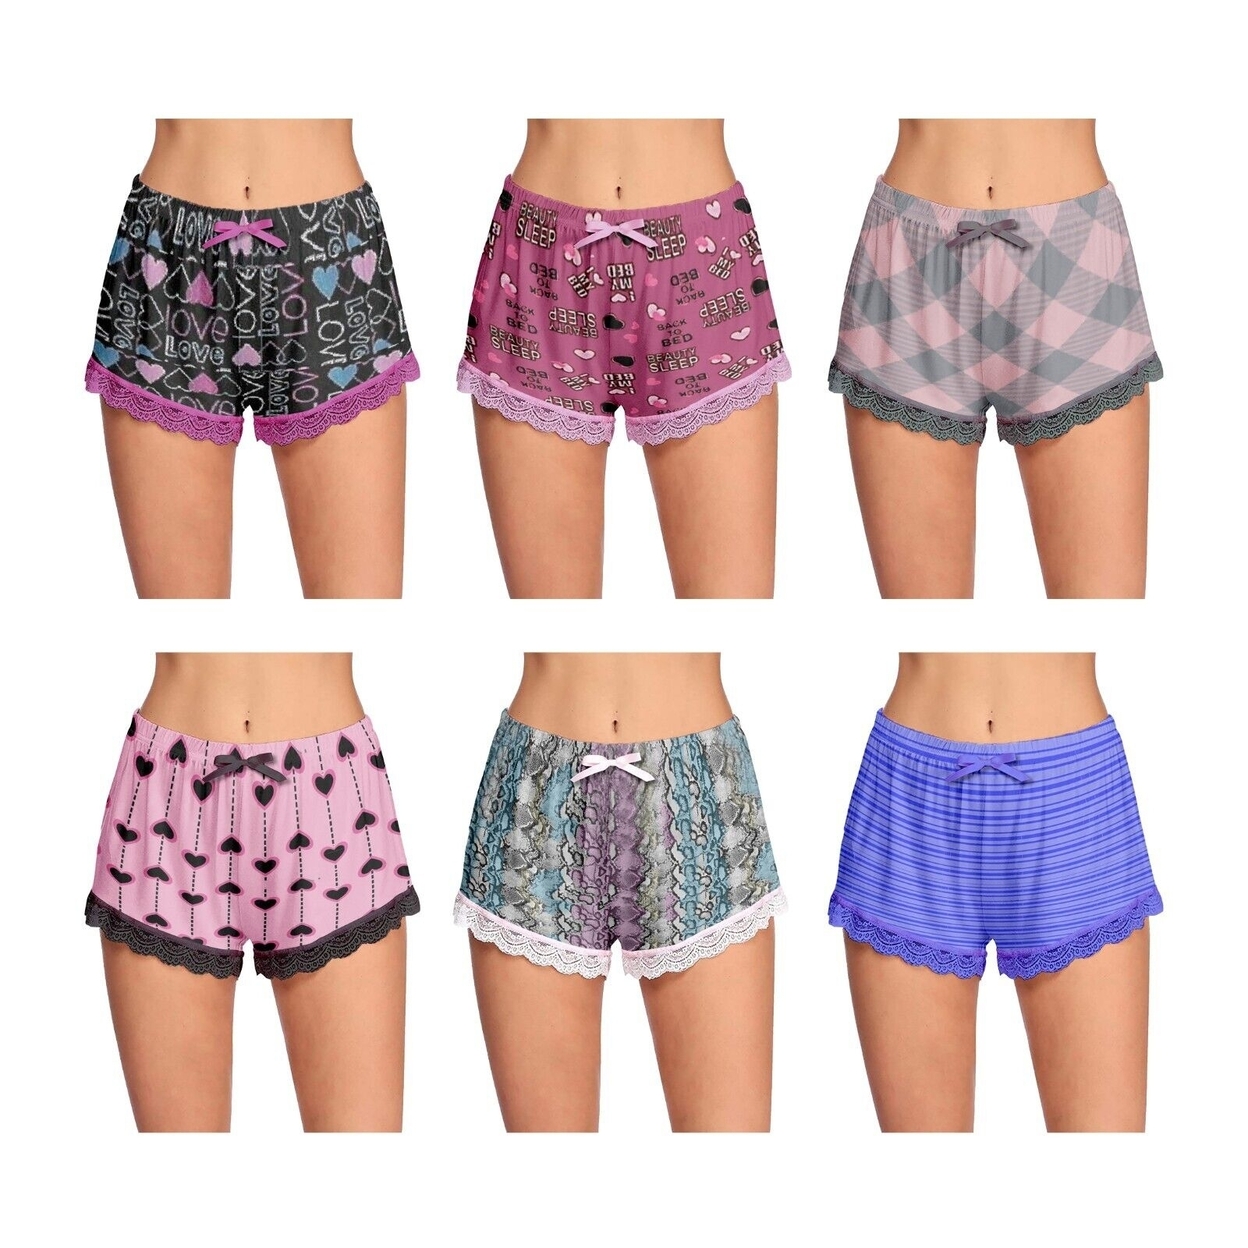 4-Pack: Women's Ultra-Soft Cozy Fun Printed Lace Trim Pajama Lounge Shorts - Large, Love